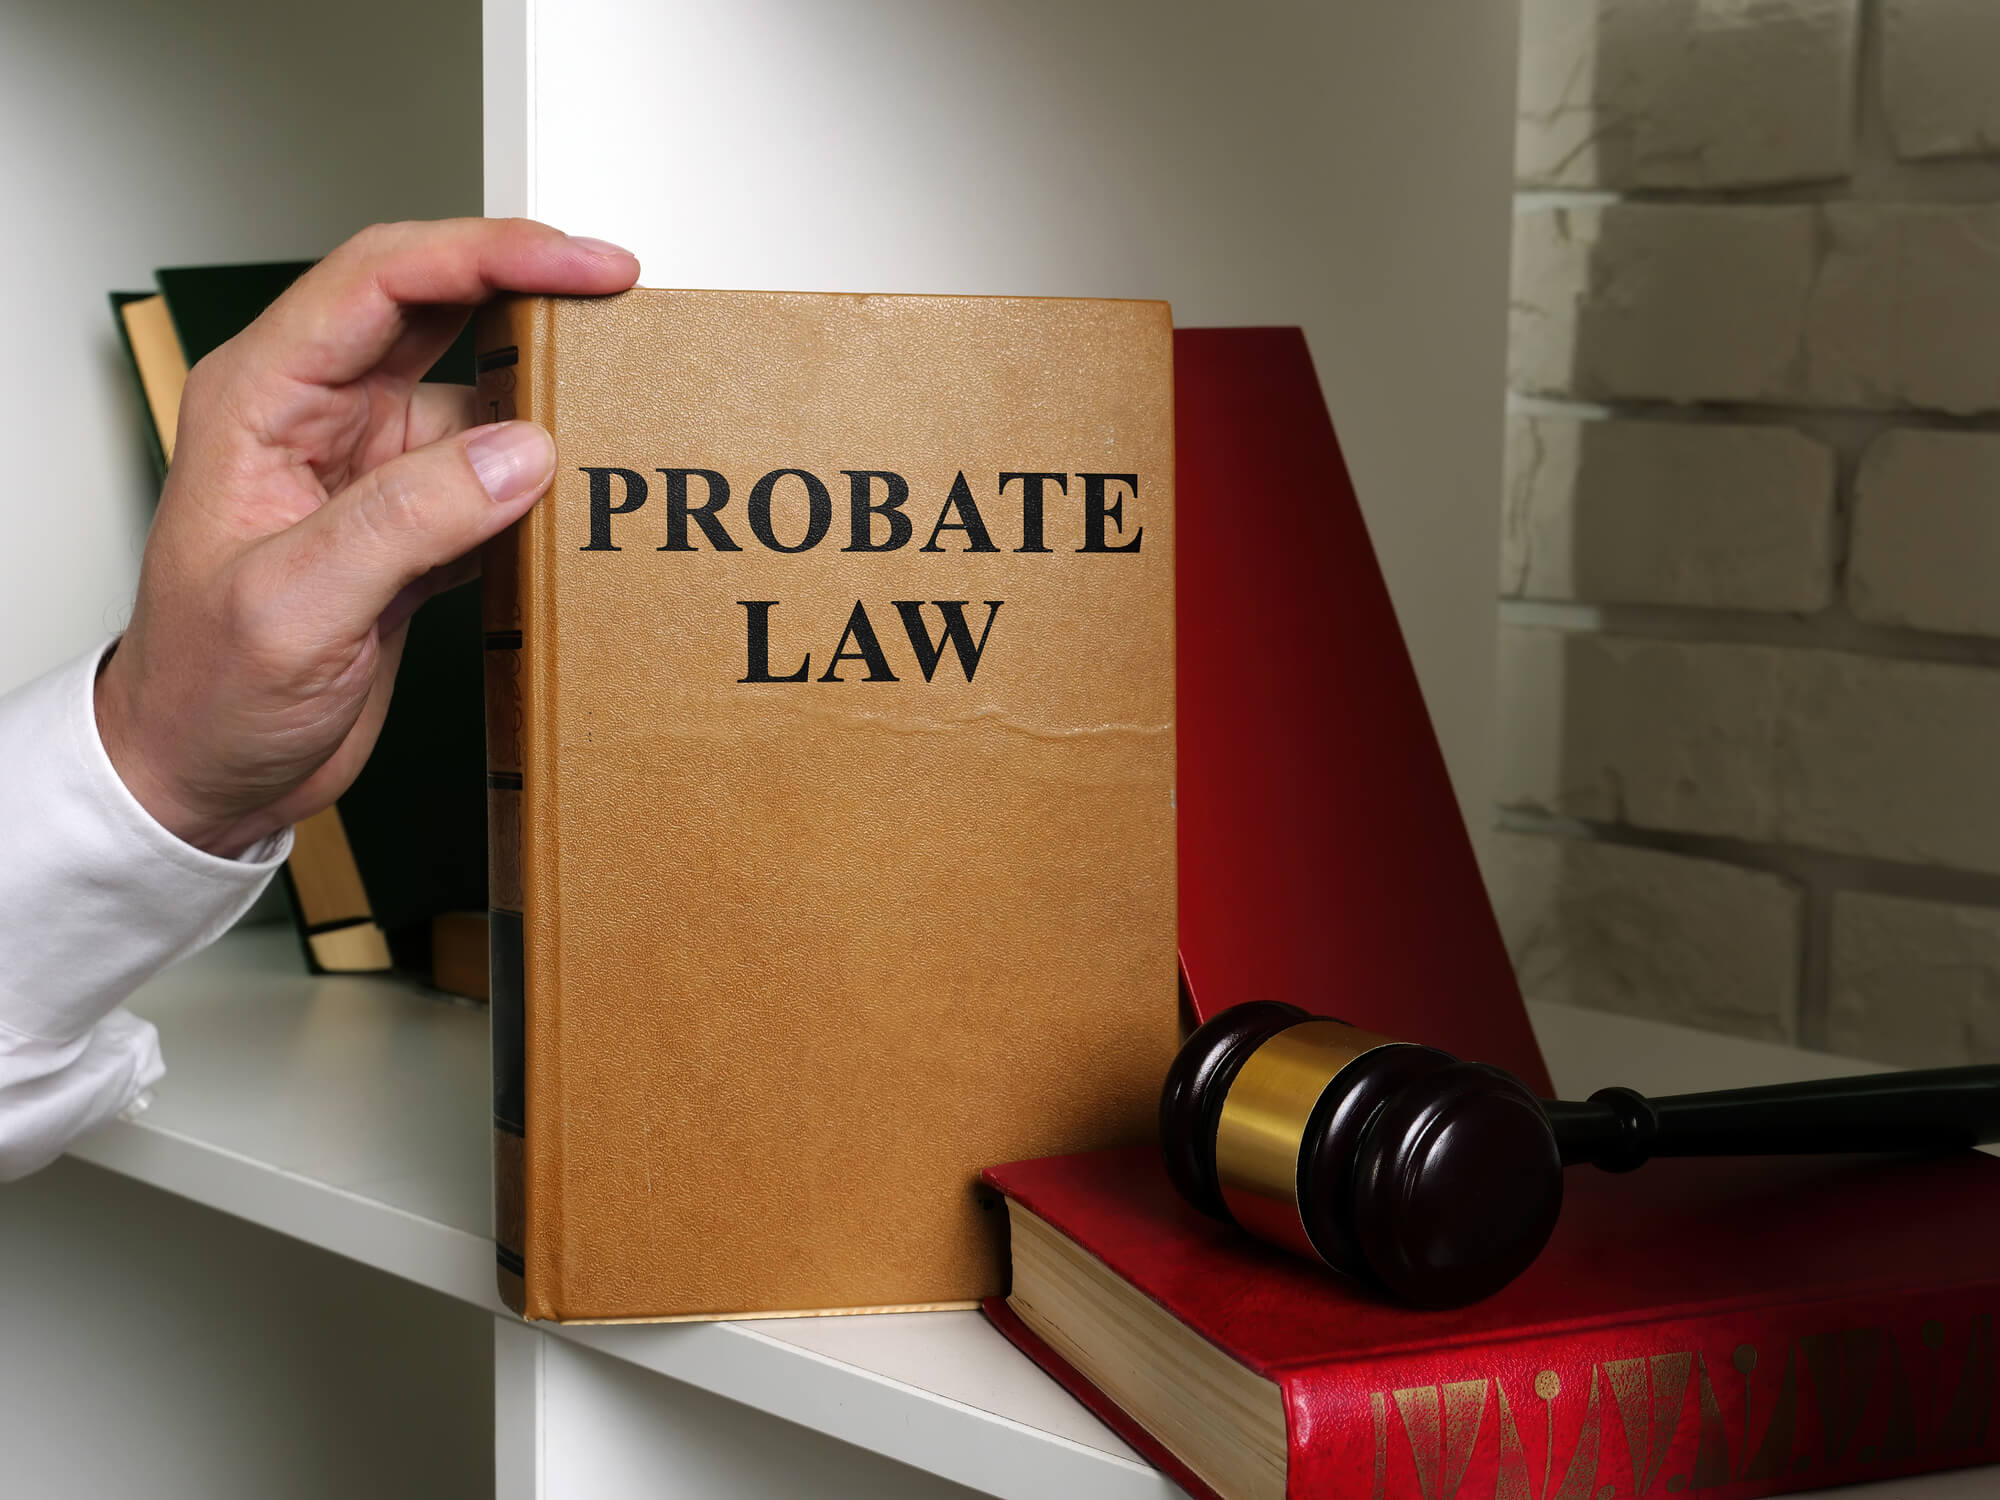 Probate Law Book on a Shelf